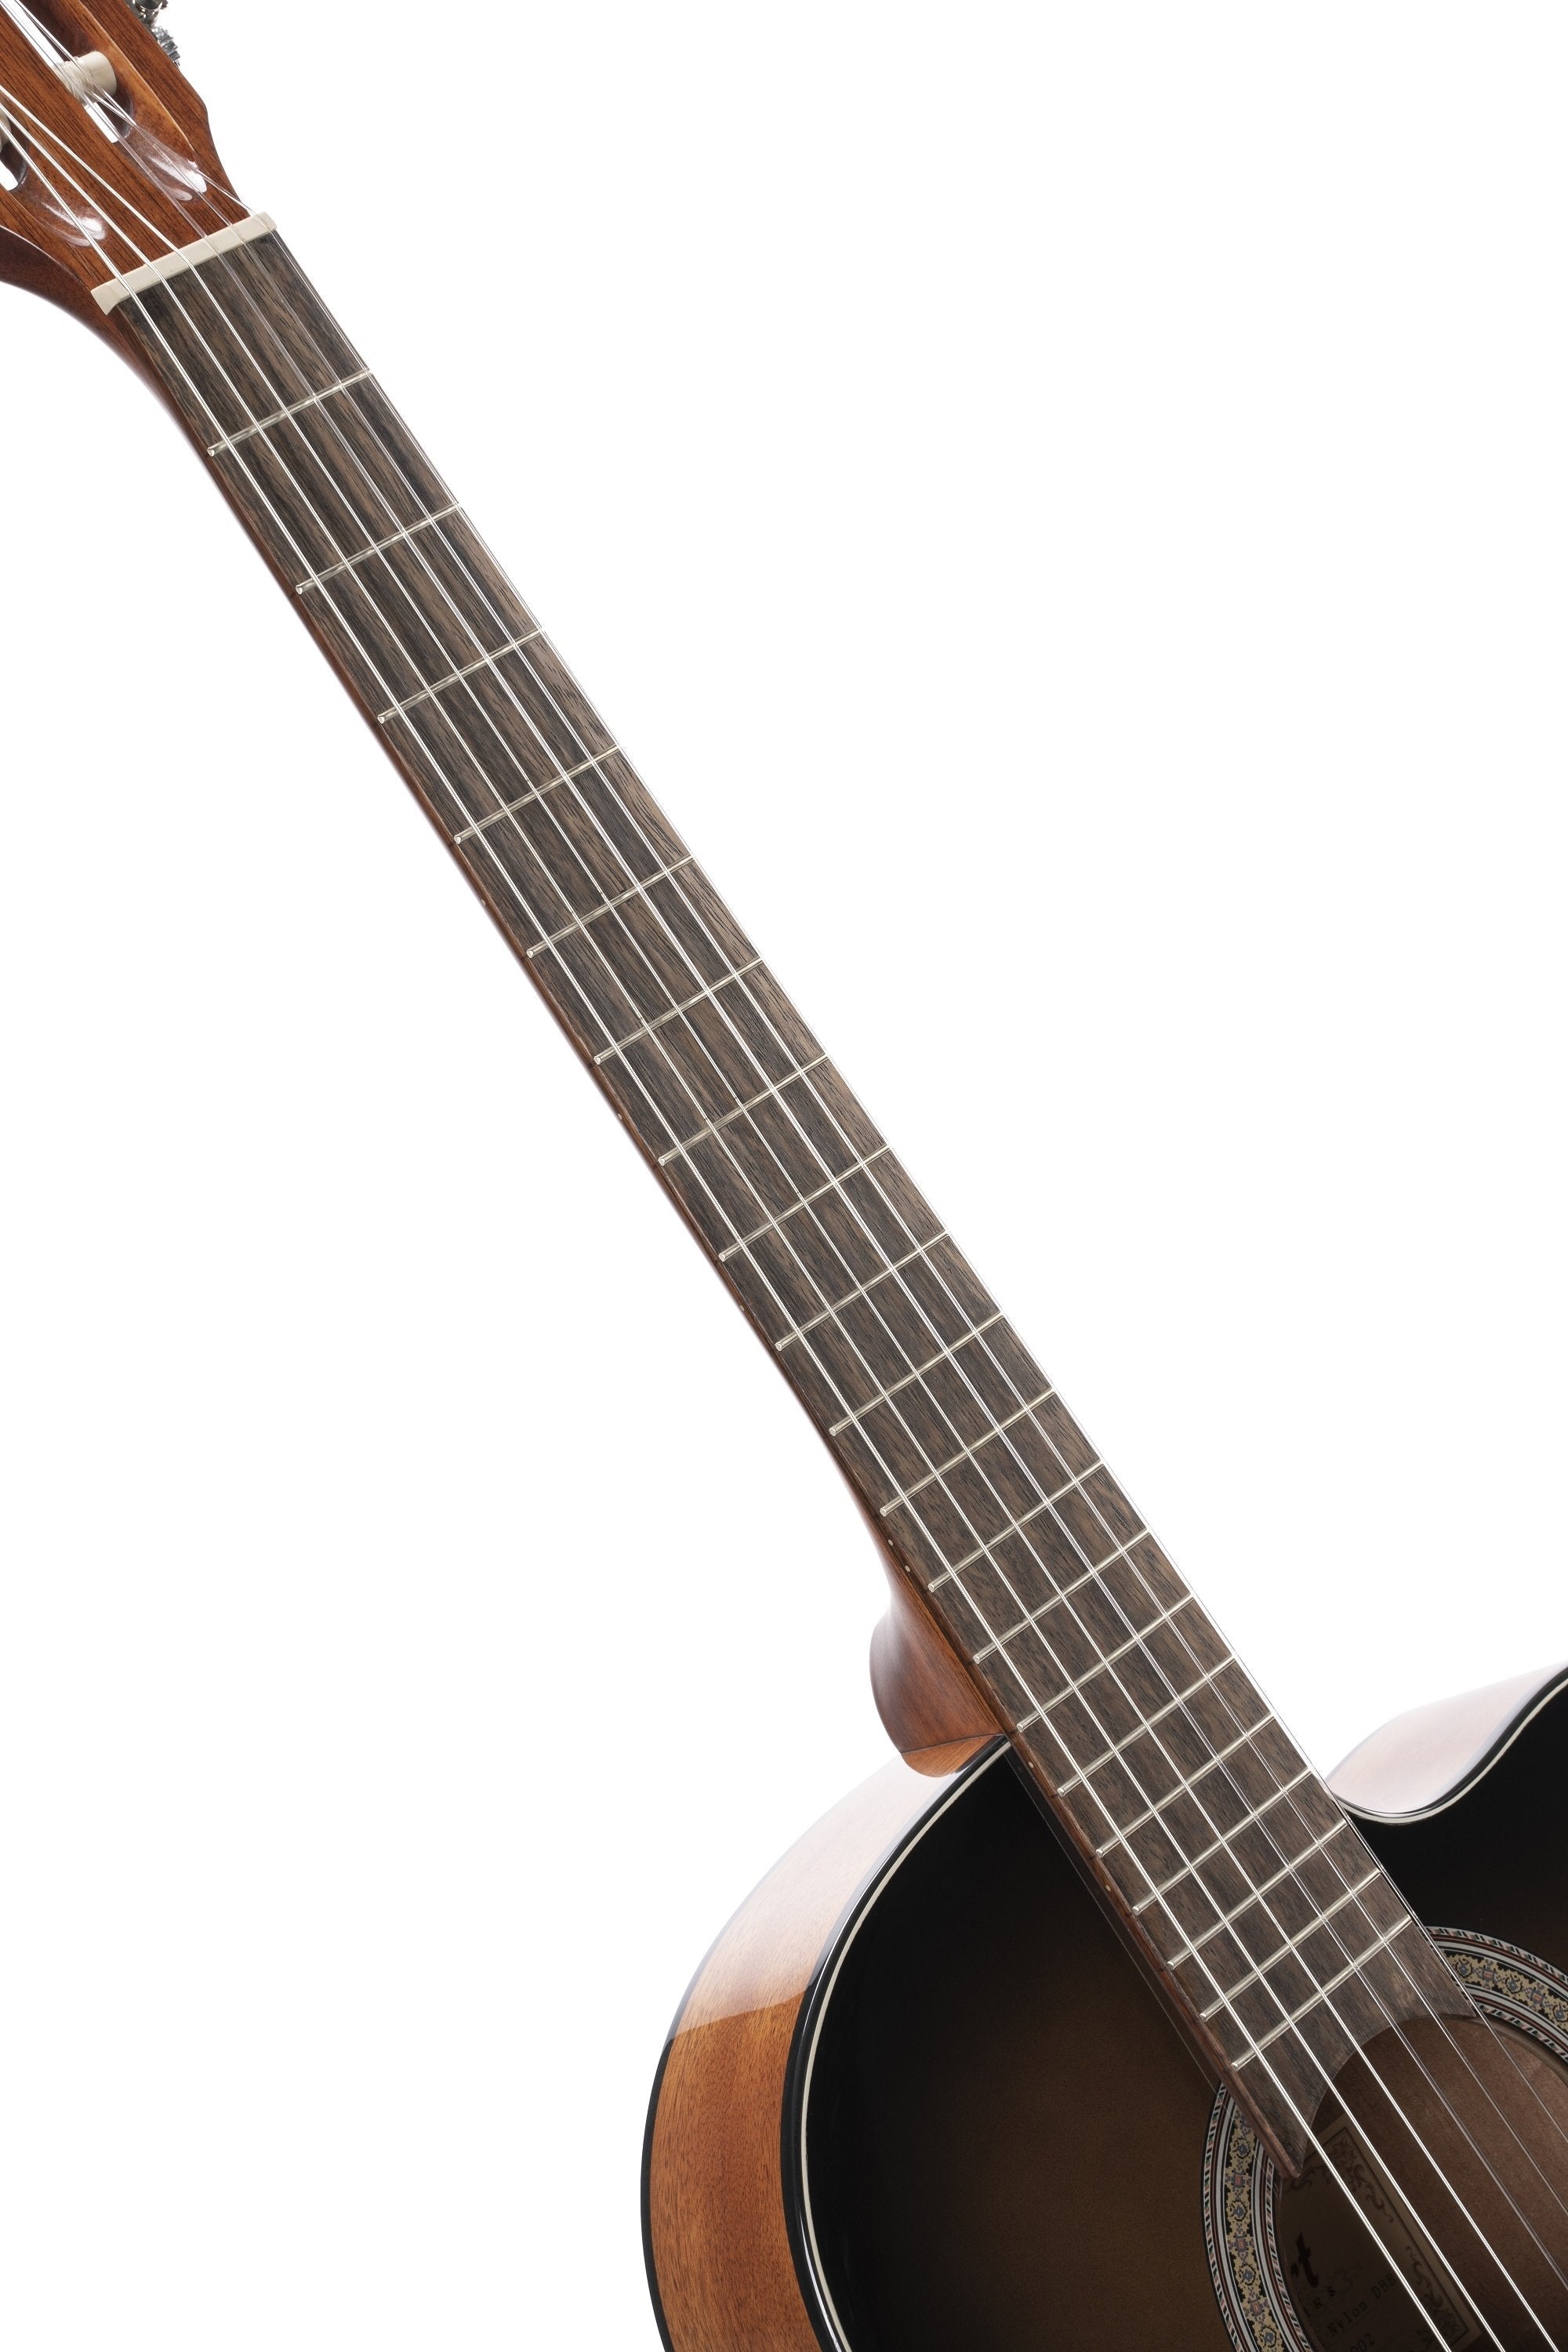 Cort Jade E Nylon Dark Brown Burst, Acoustic Guitar for sale at Richards Guitars.